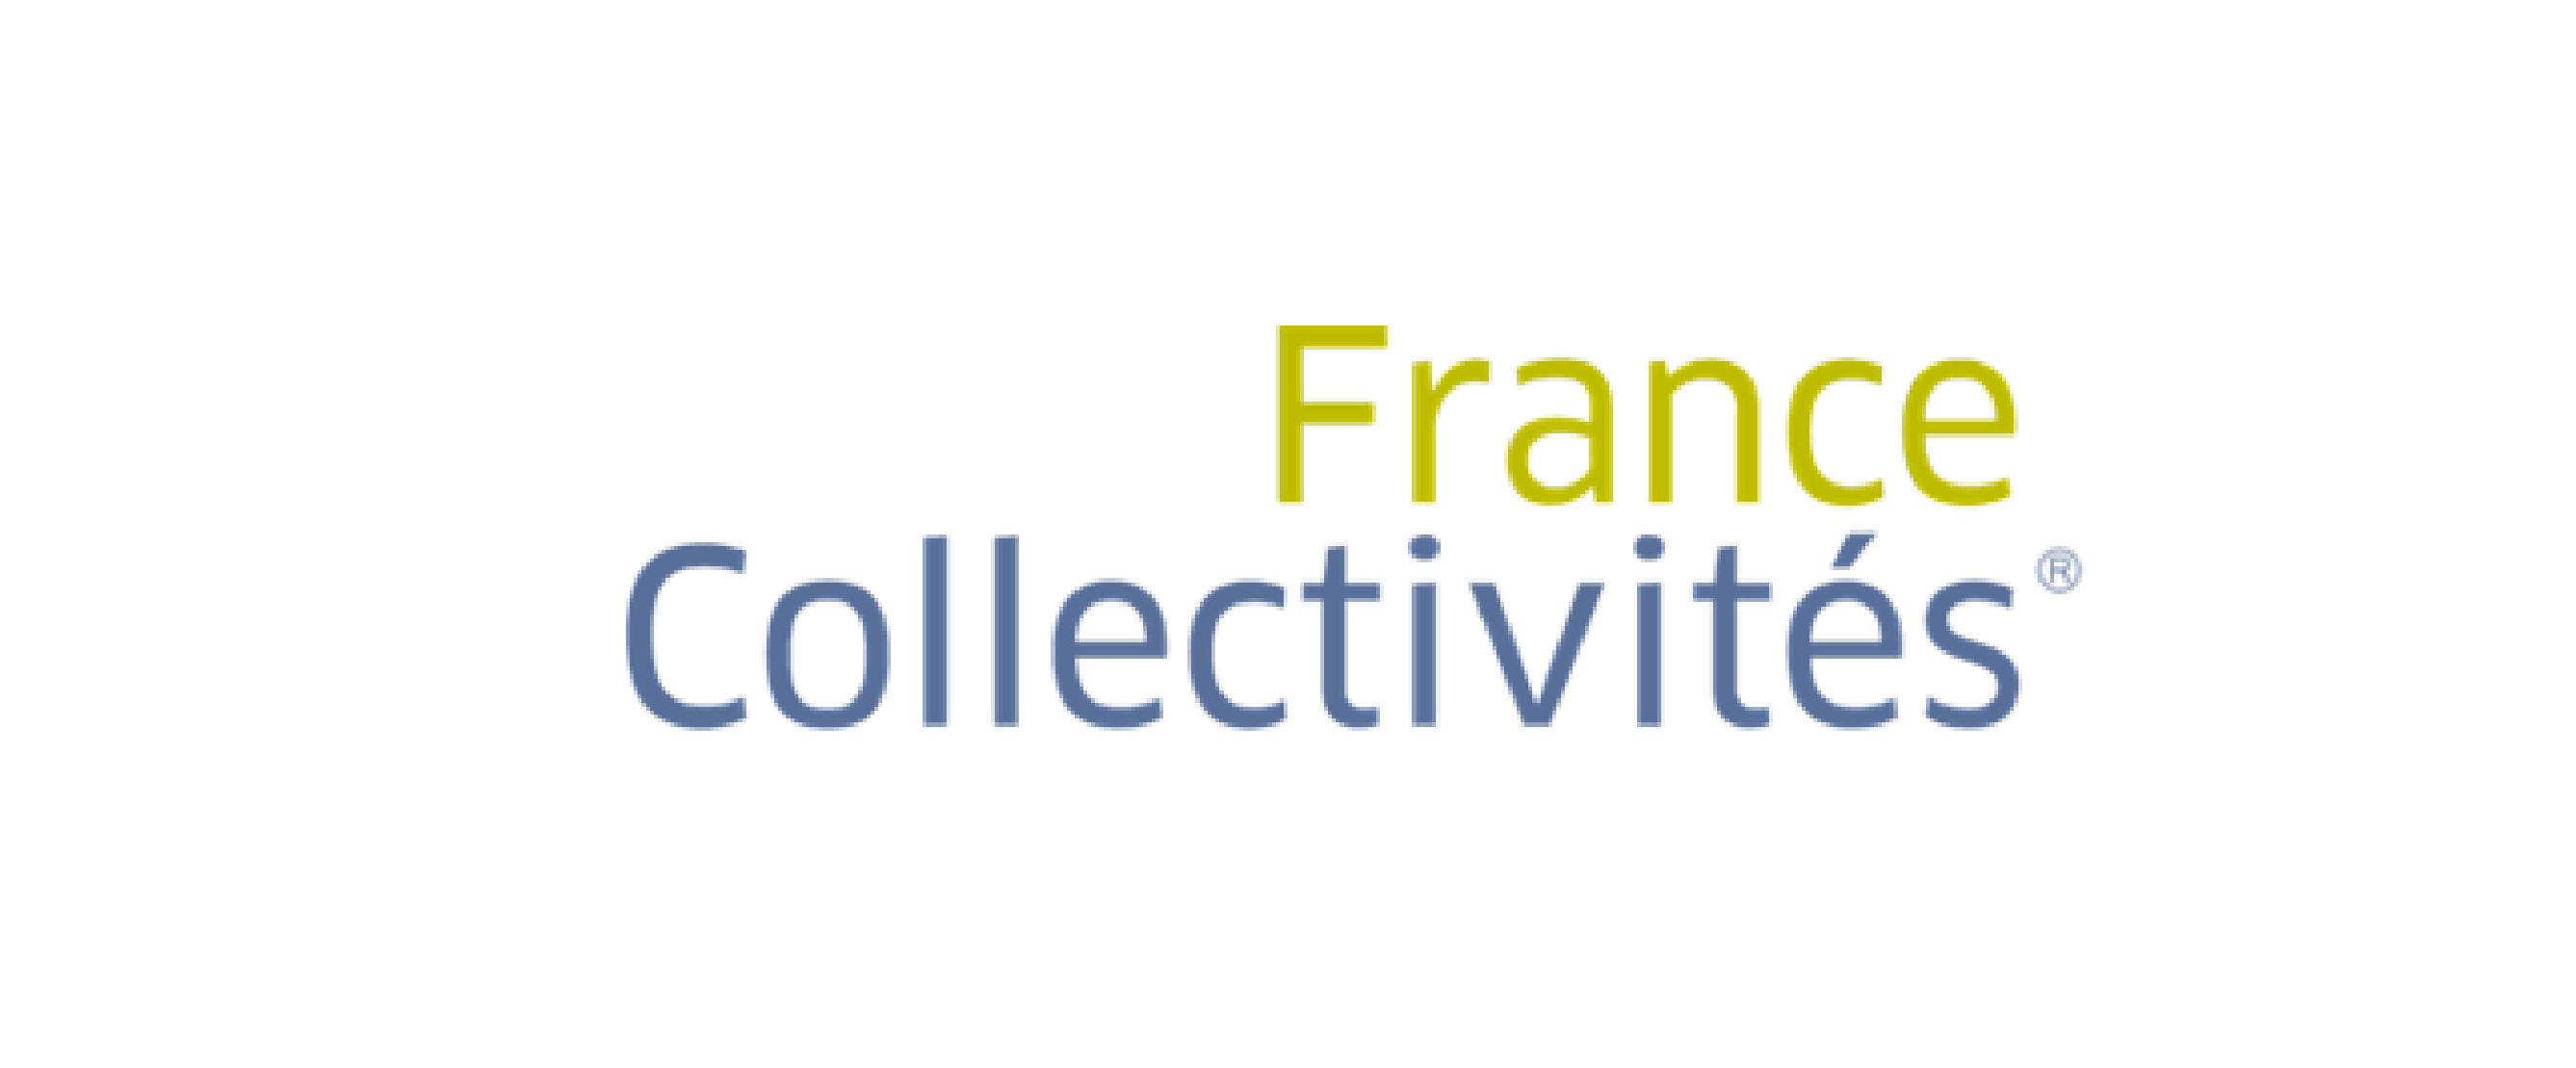 france-collectivites-logo